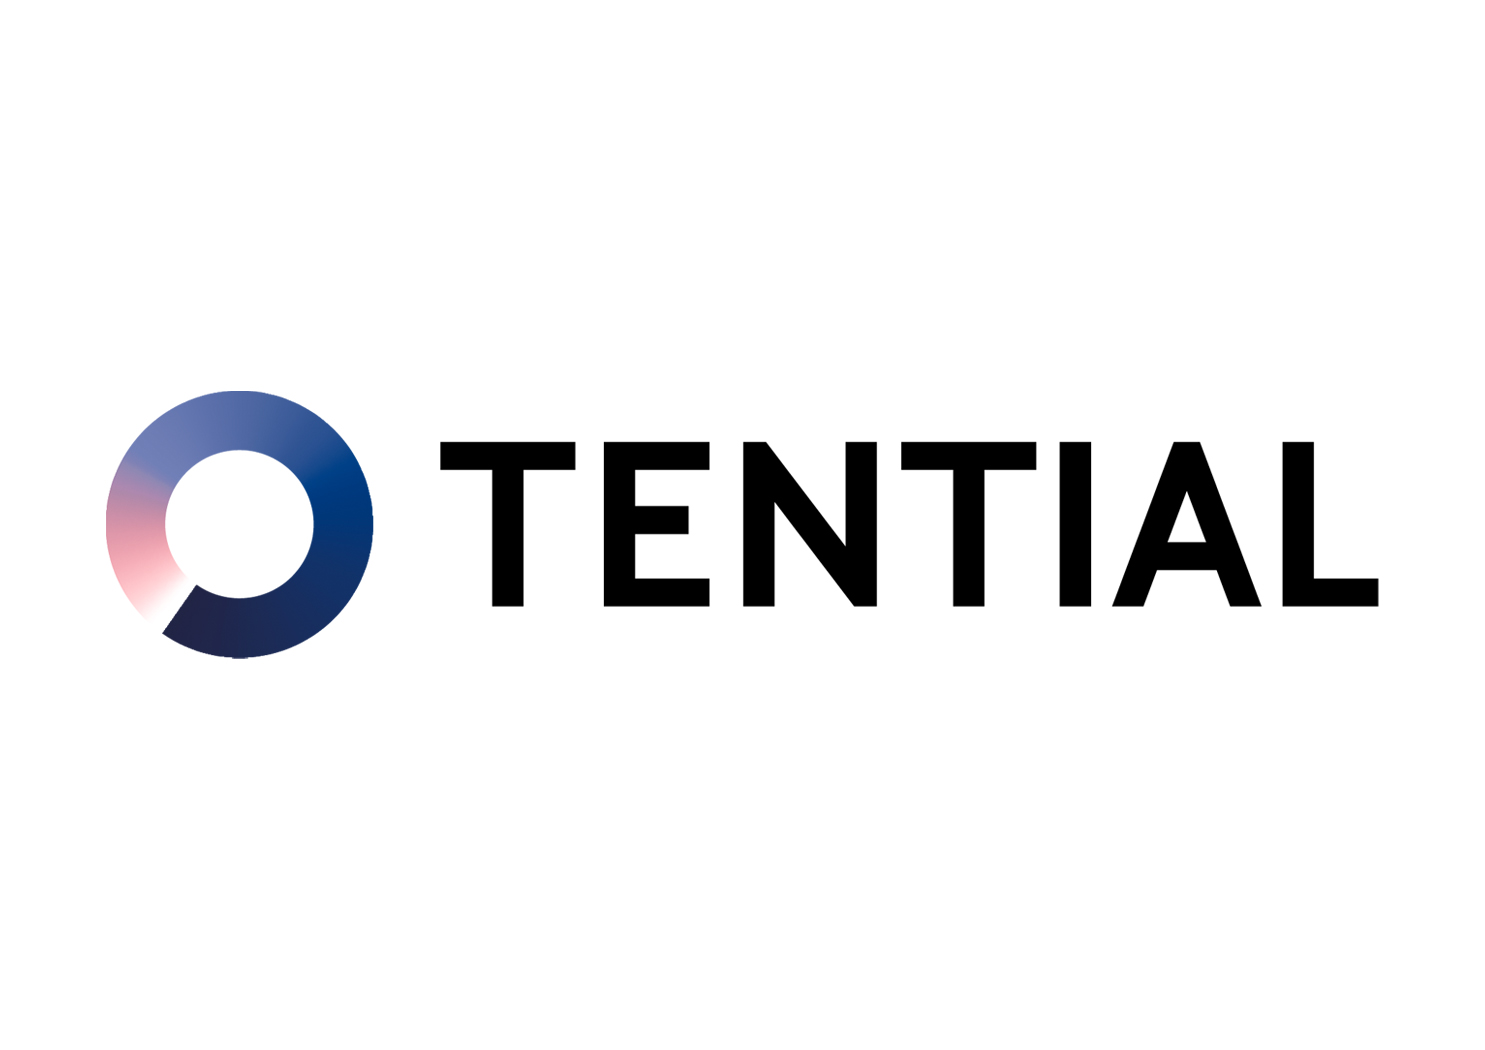 TENTIAL logo